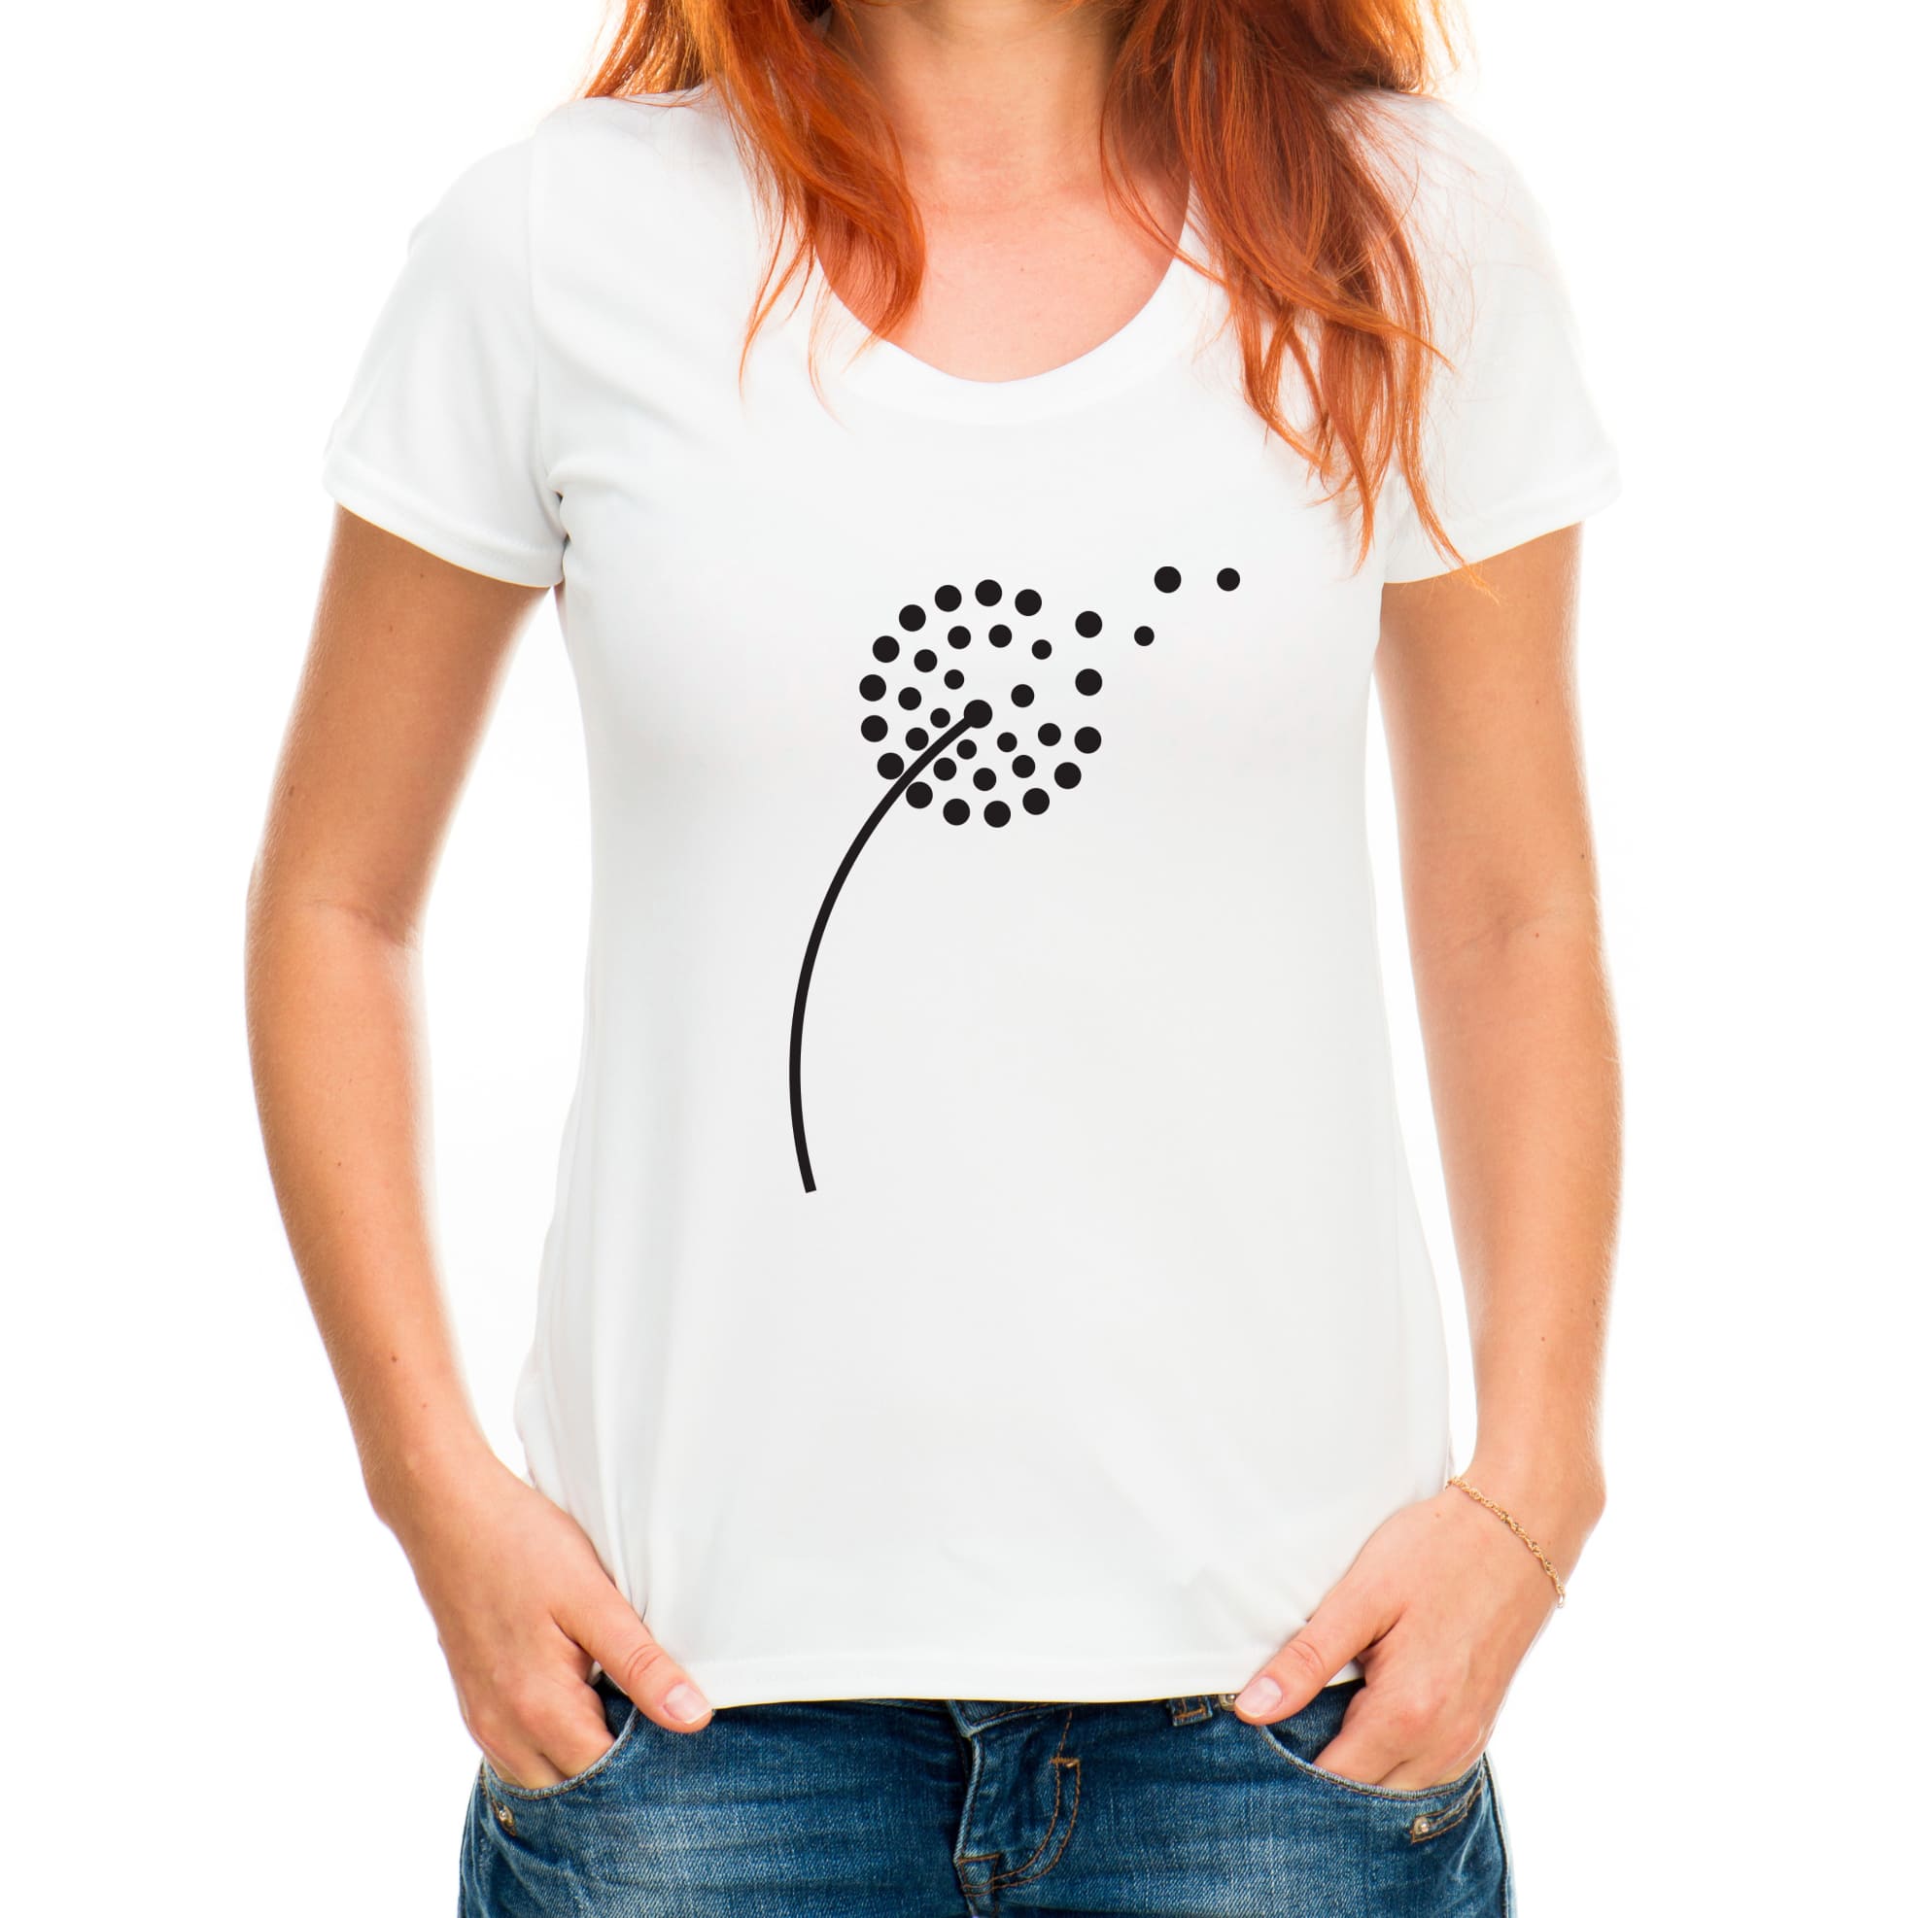 T-shirt image with enchanting dandelion print.